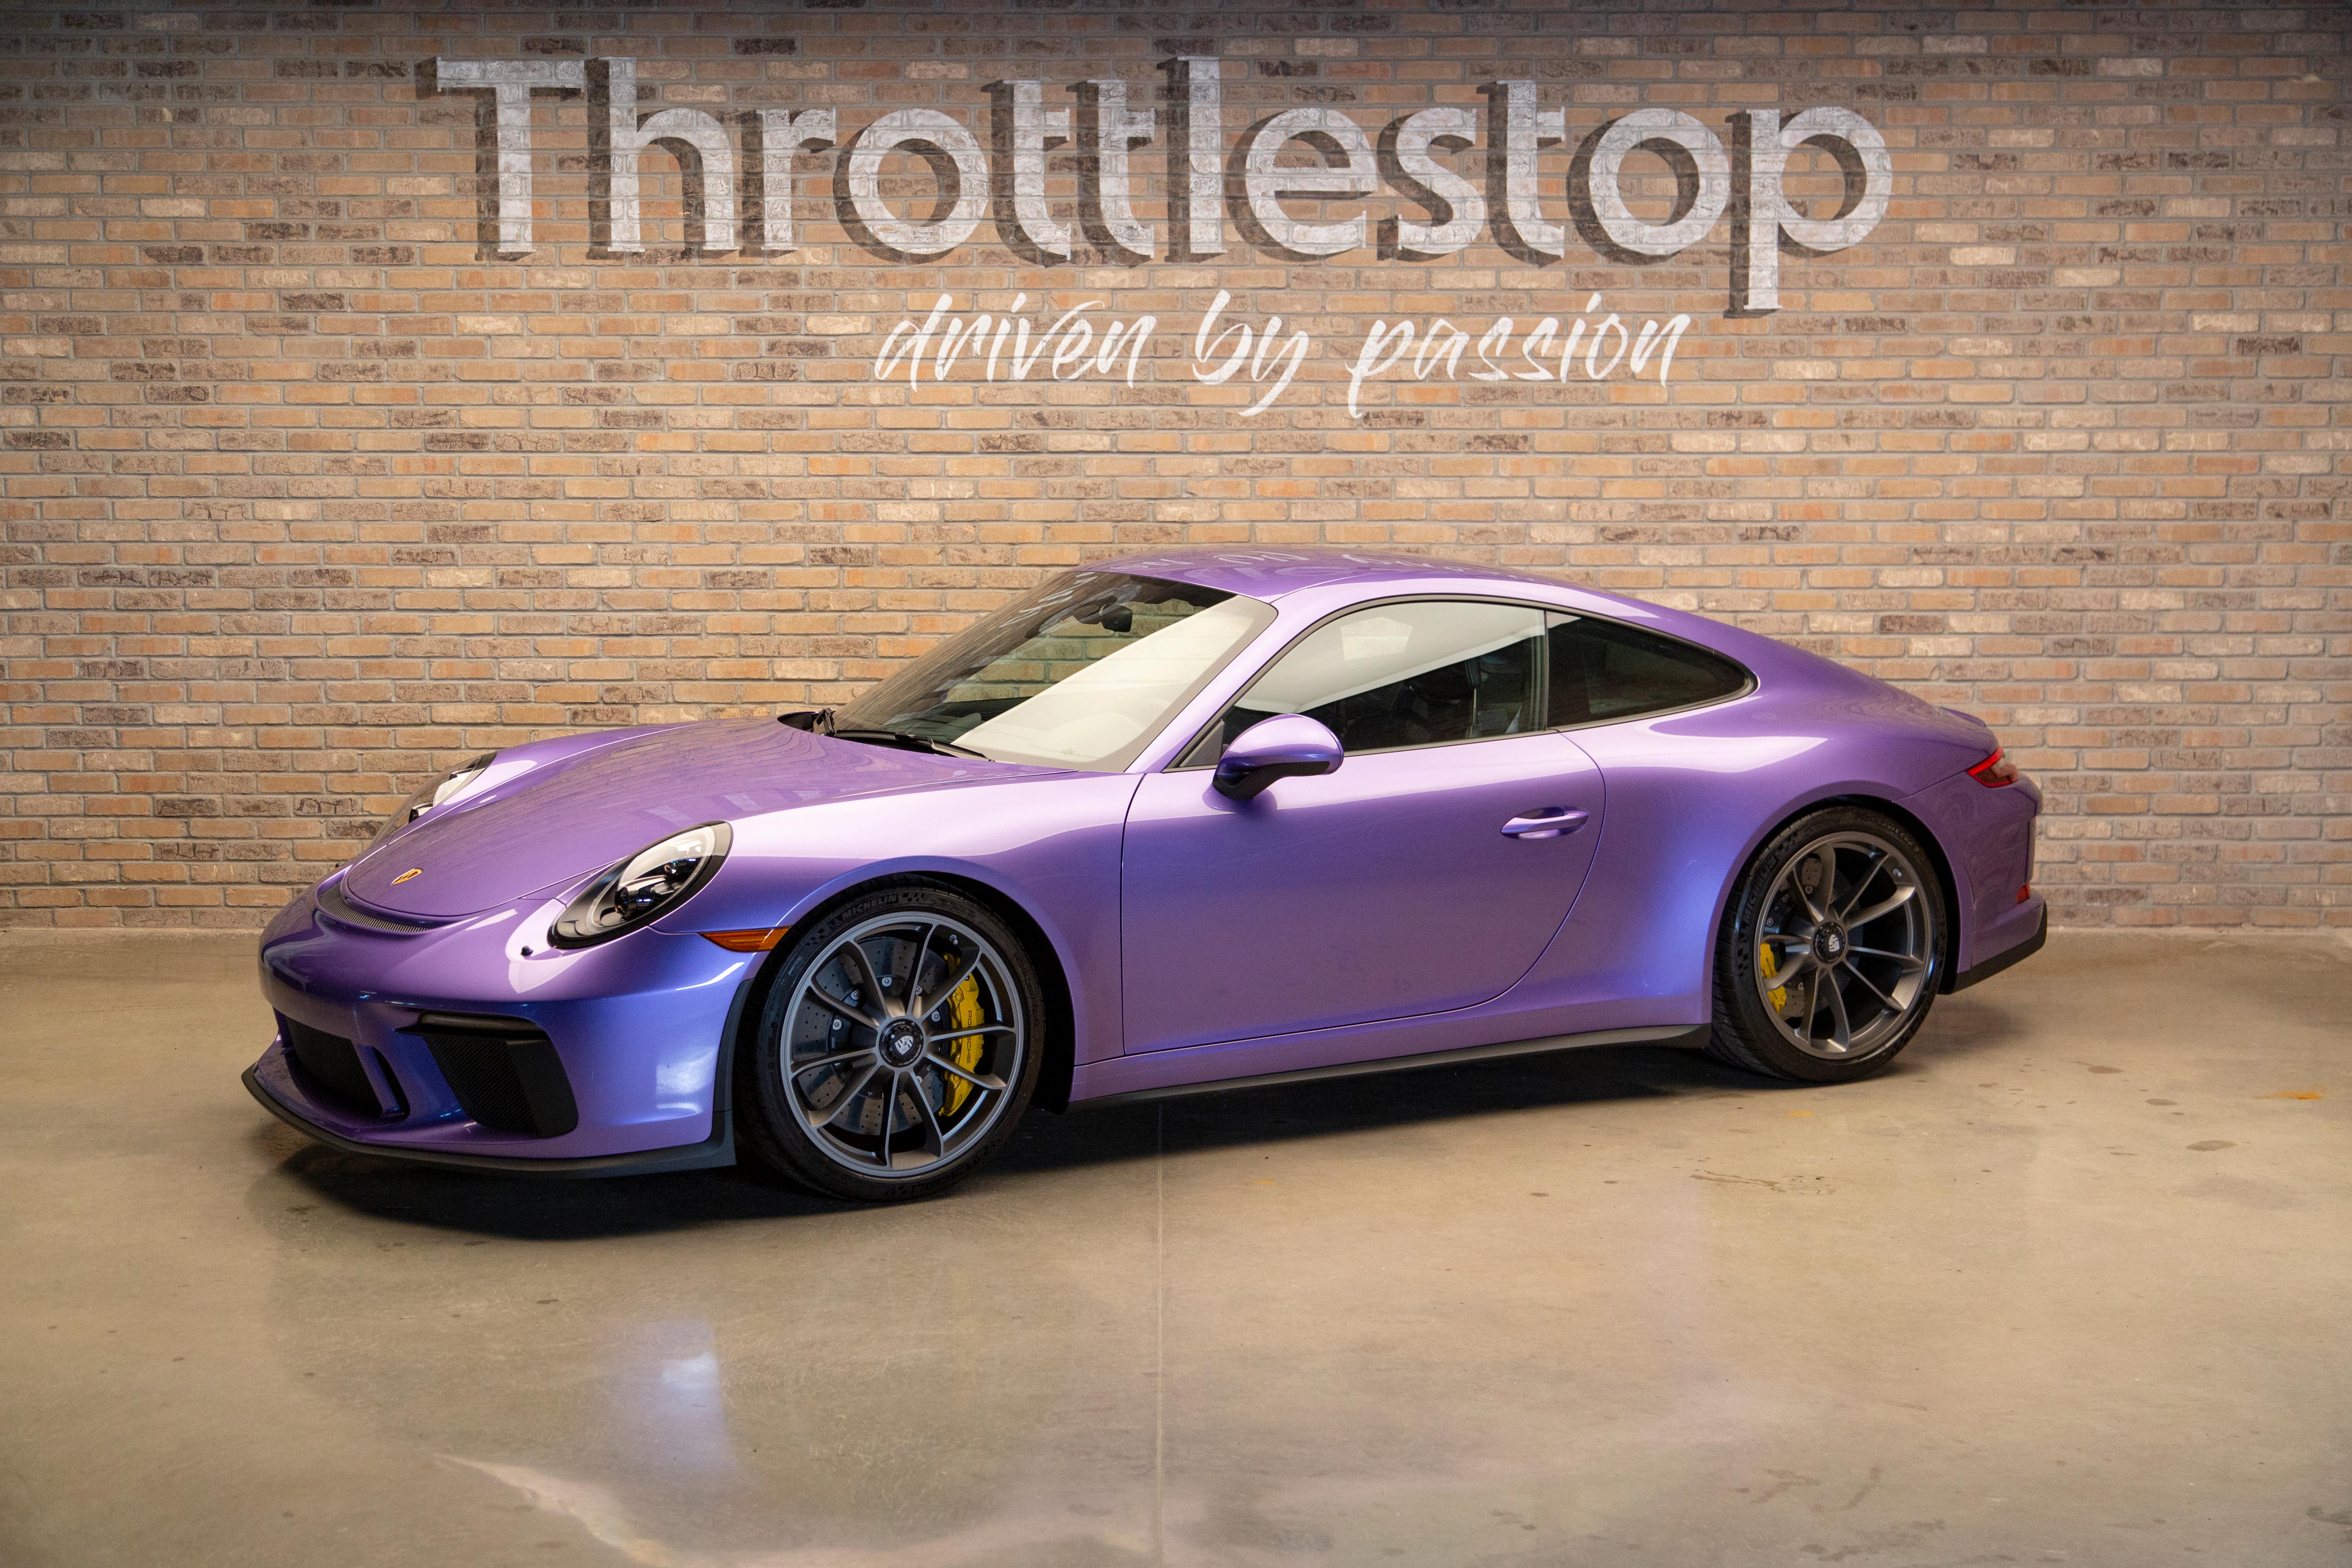 General 5000x3333 Porsche Porsche 911 sports car purple cars car text vehicle